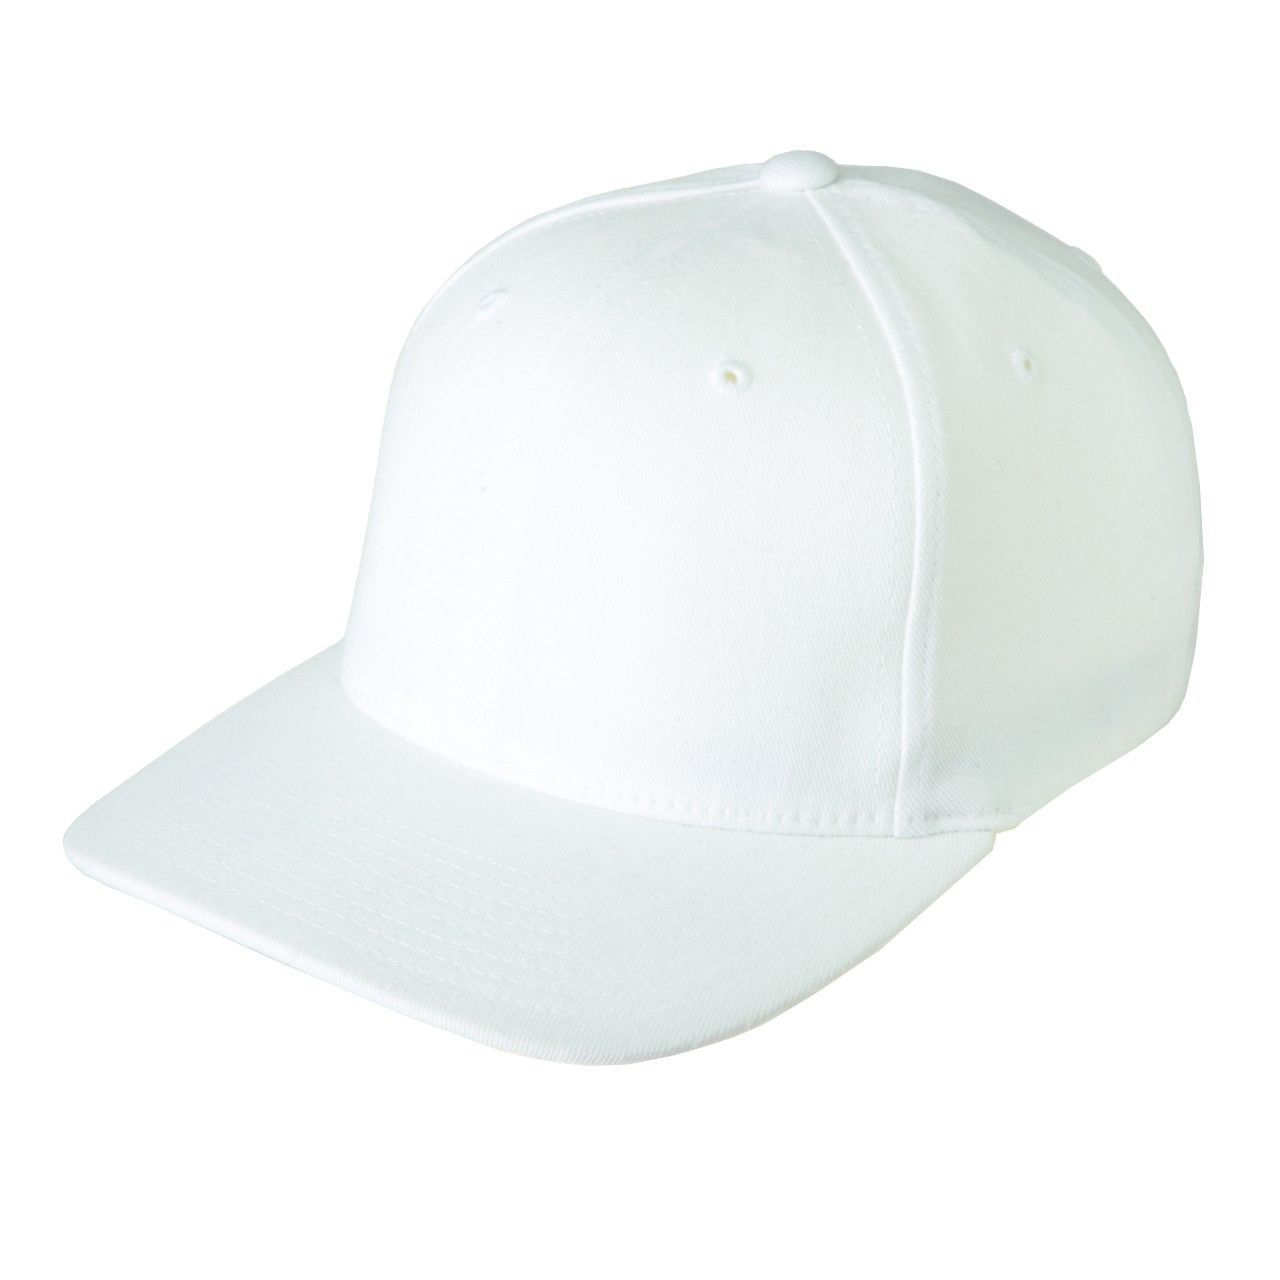 MEN'S GUYS FLEXFIT YUPOONG PLAIN BASEBALL HAT CAP LID SOLID WHITE CASUAL NEW $25 - $15.99